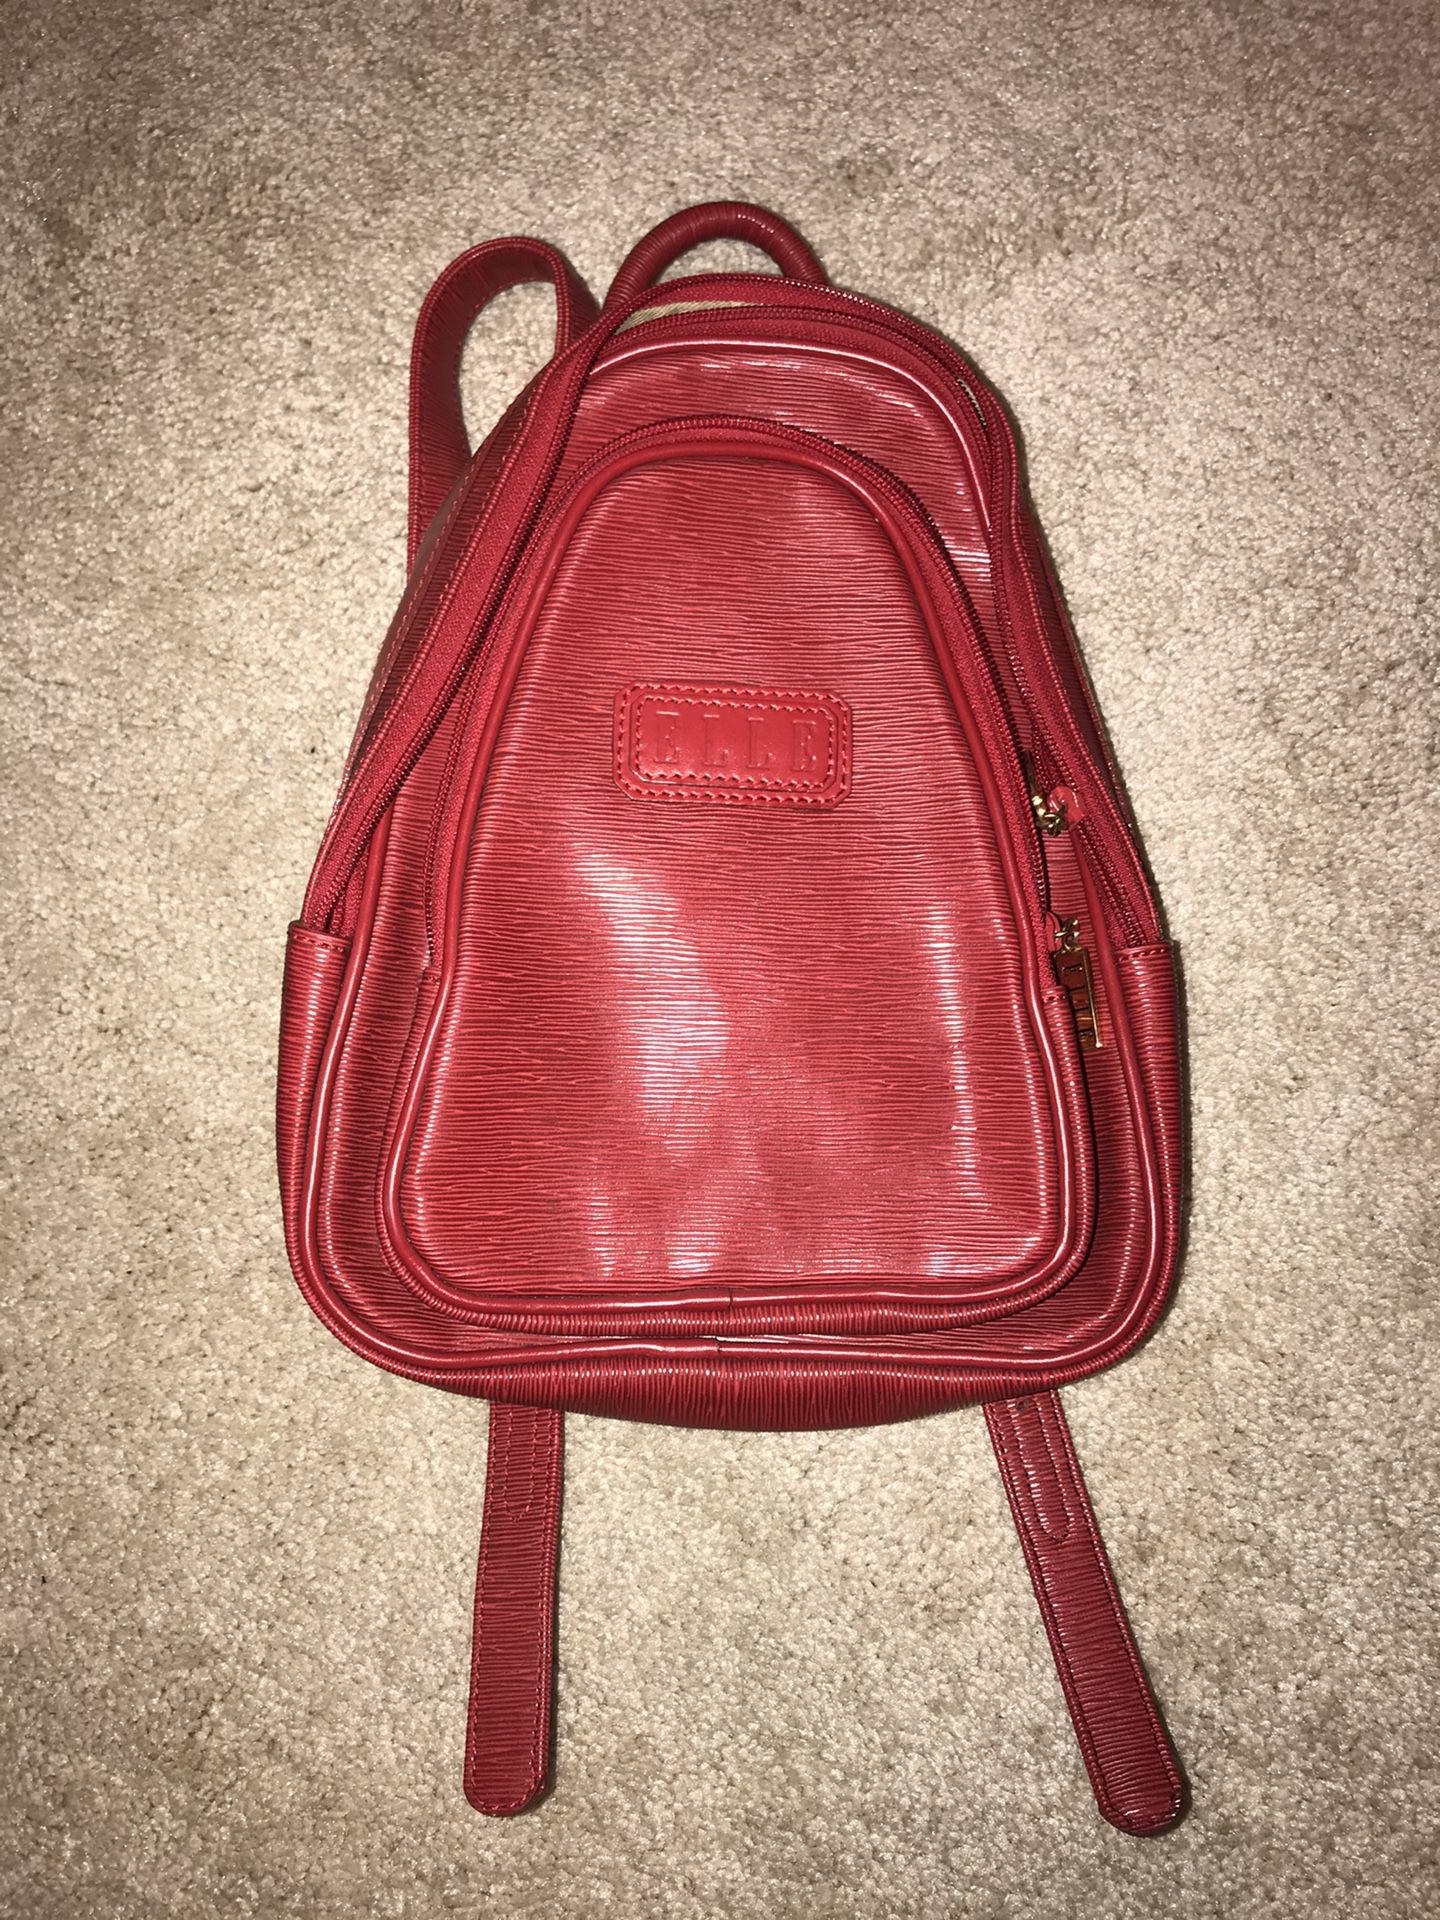 ELLE red mini backpack